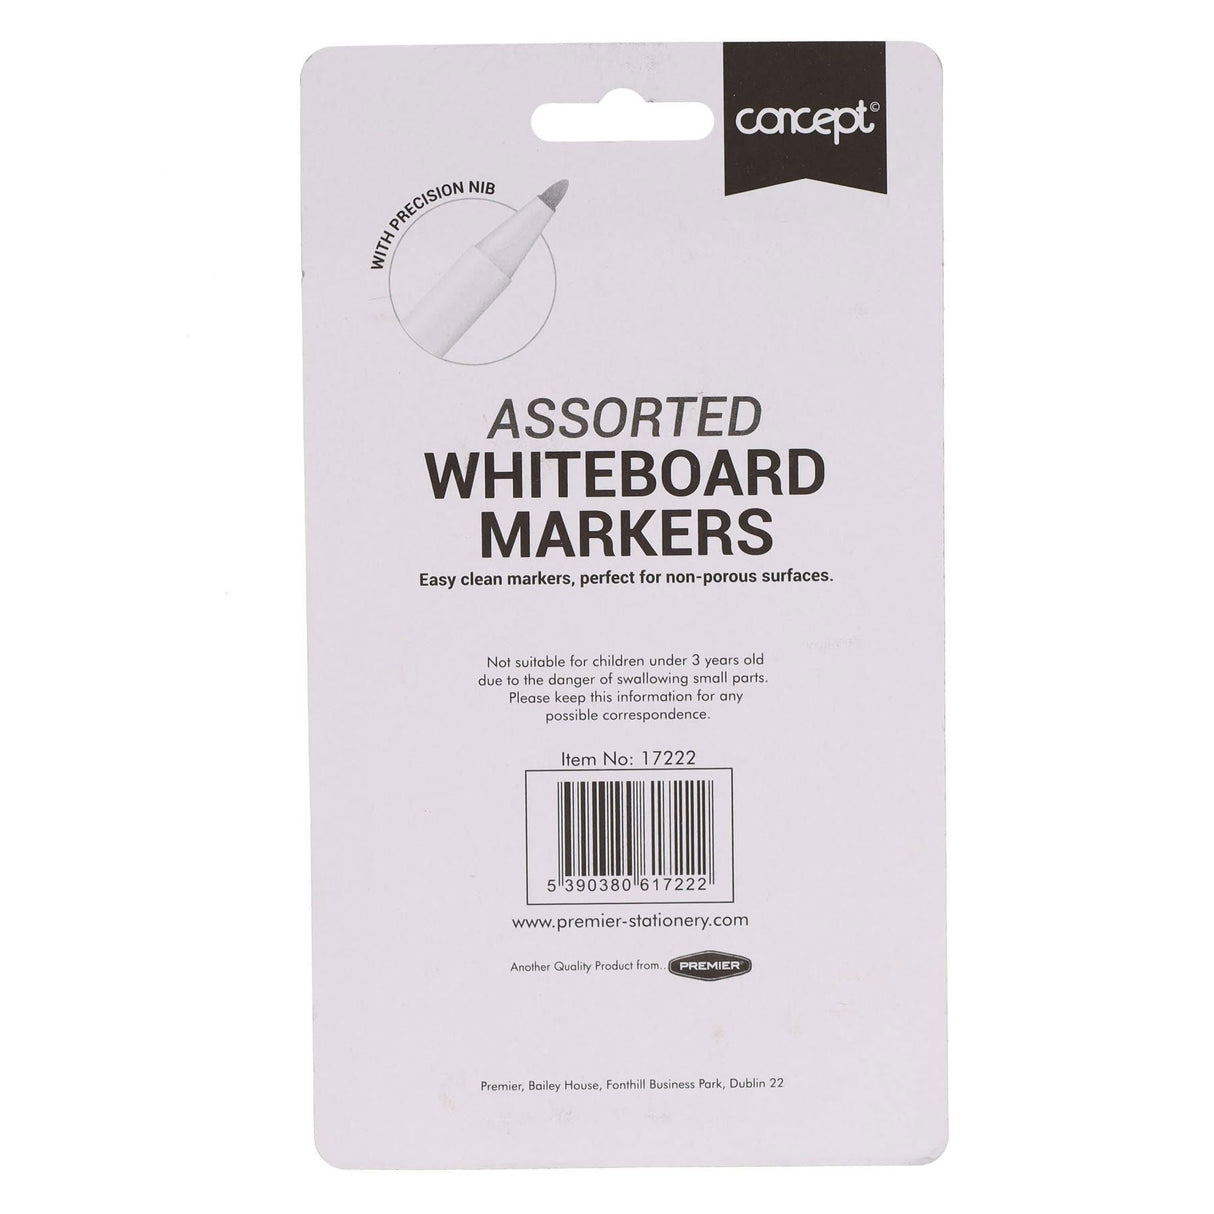 Concept Dry Erase Markers with Eraser Lid - Pack of 5 | Stationery Shop UK